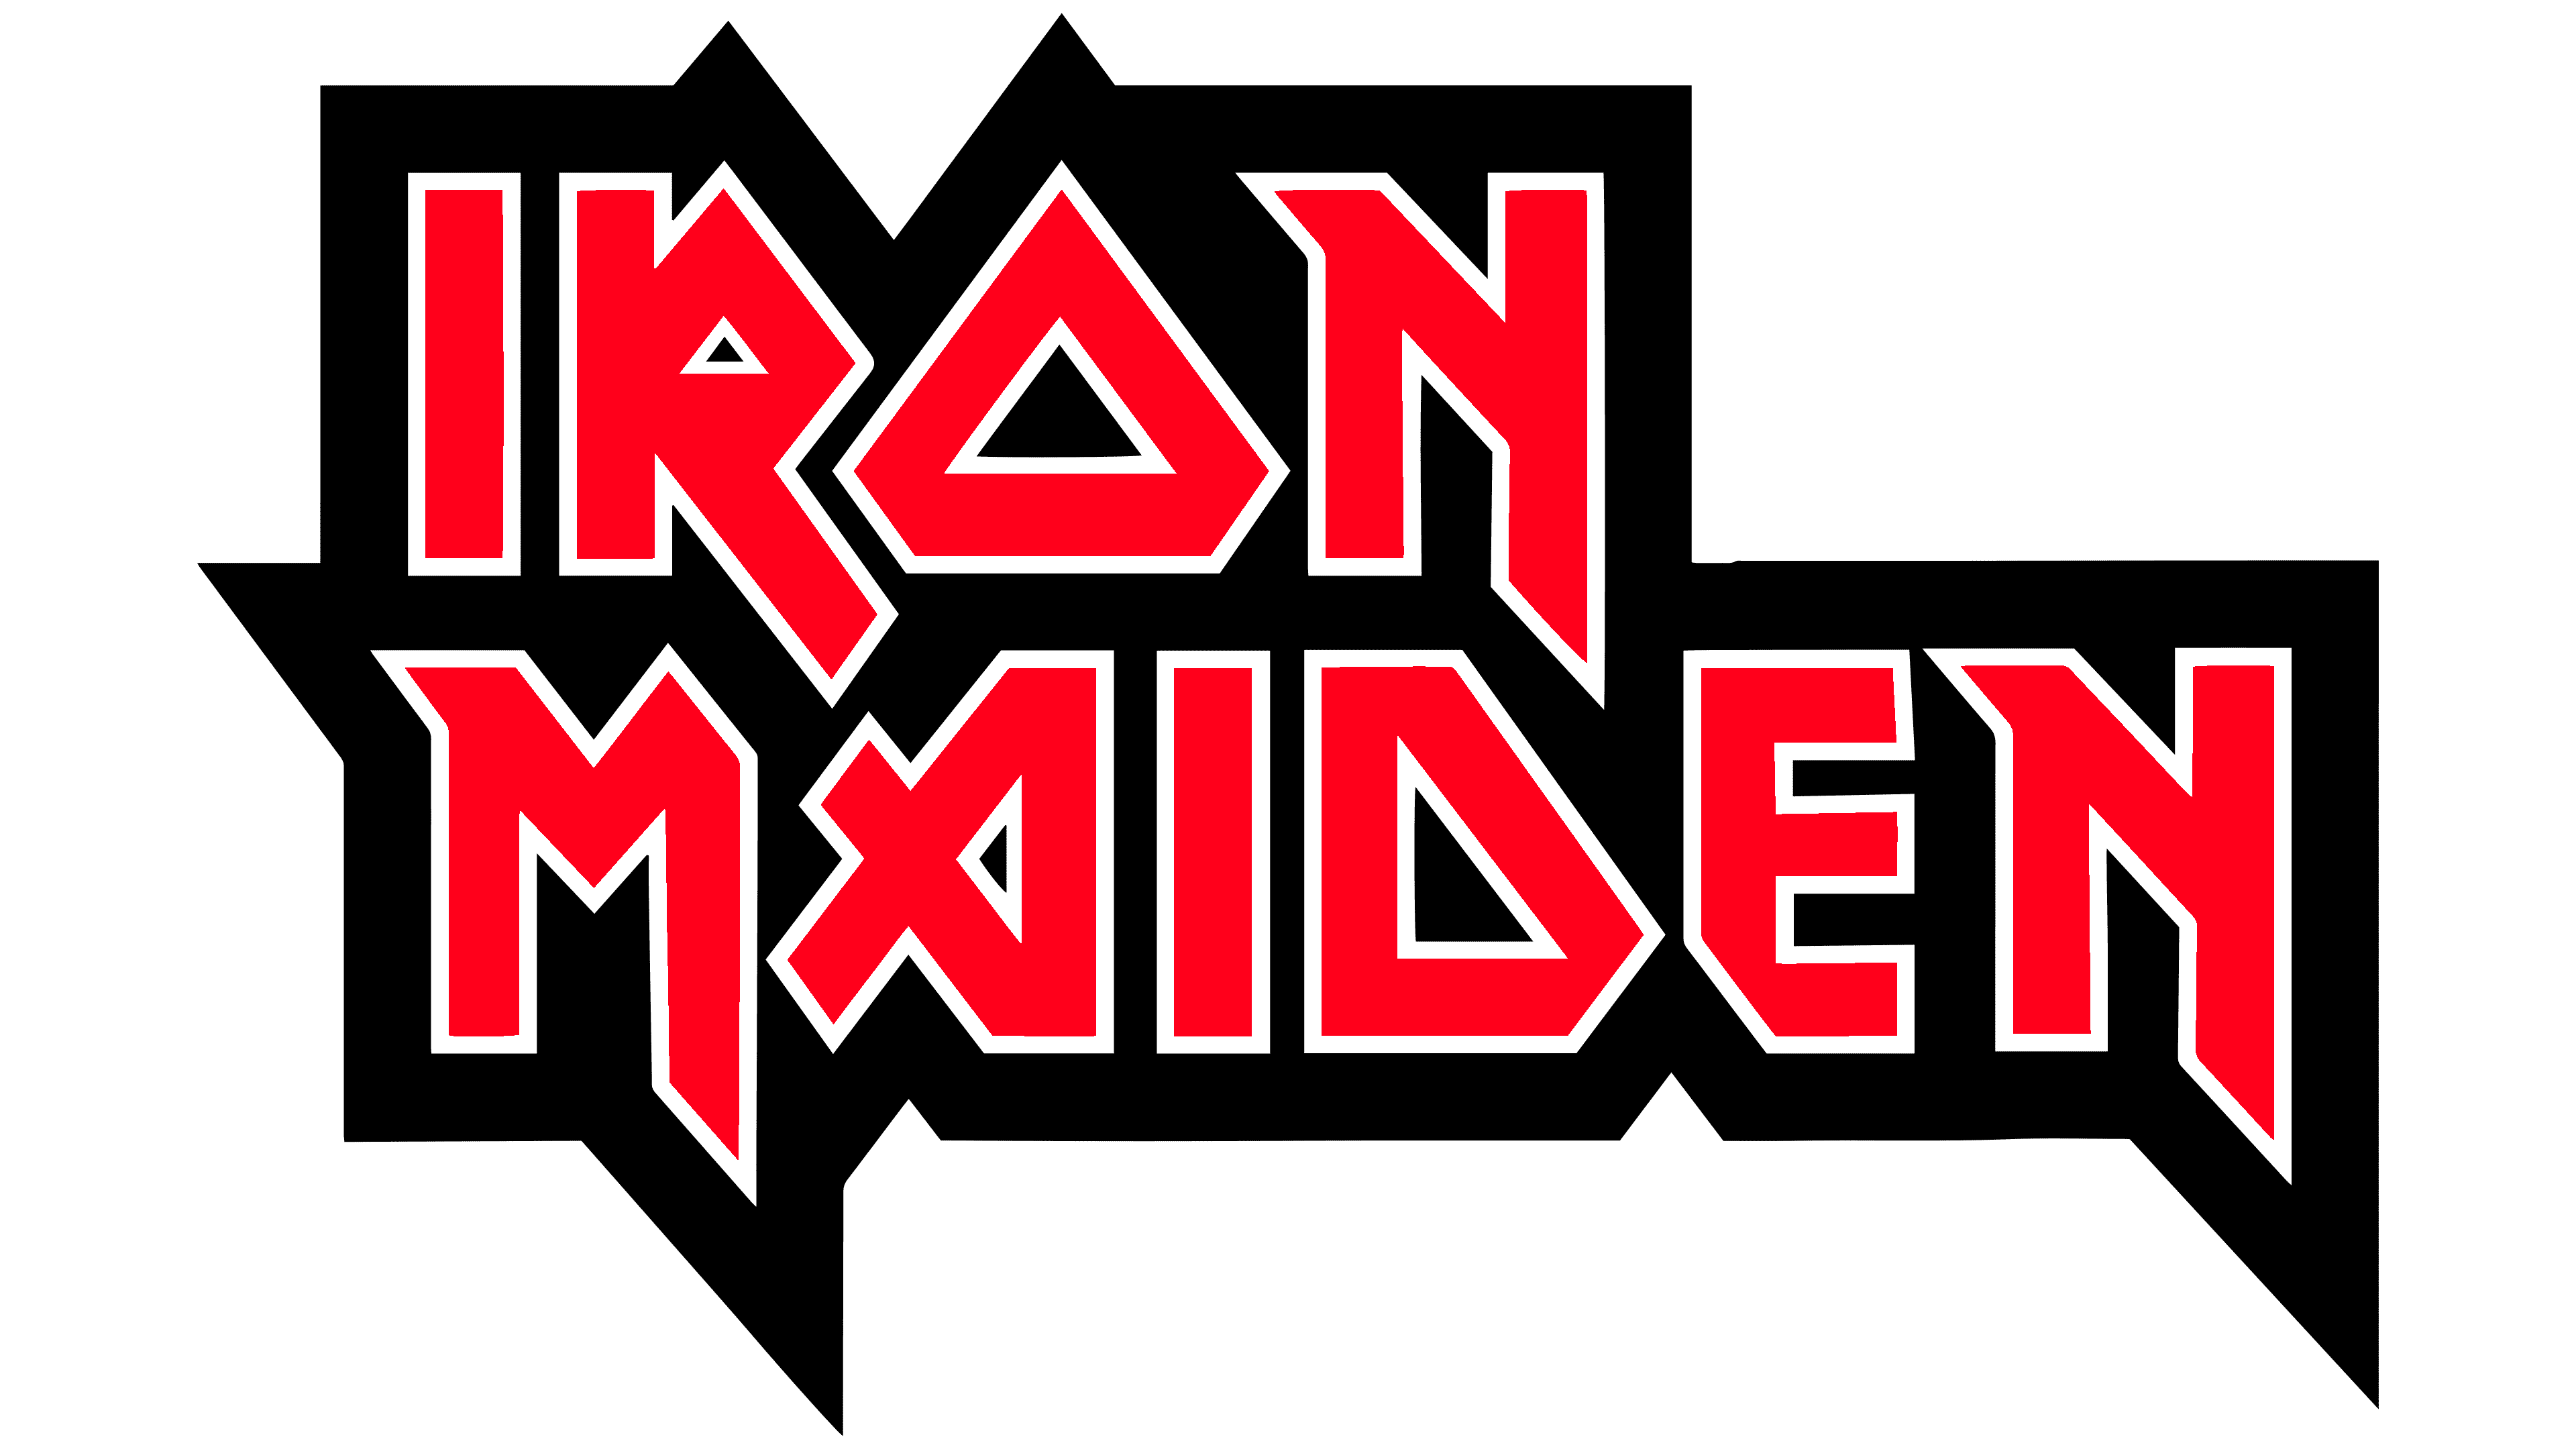 Iron Maiden Band Logo